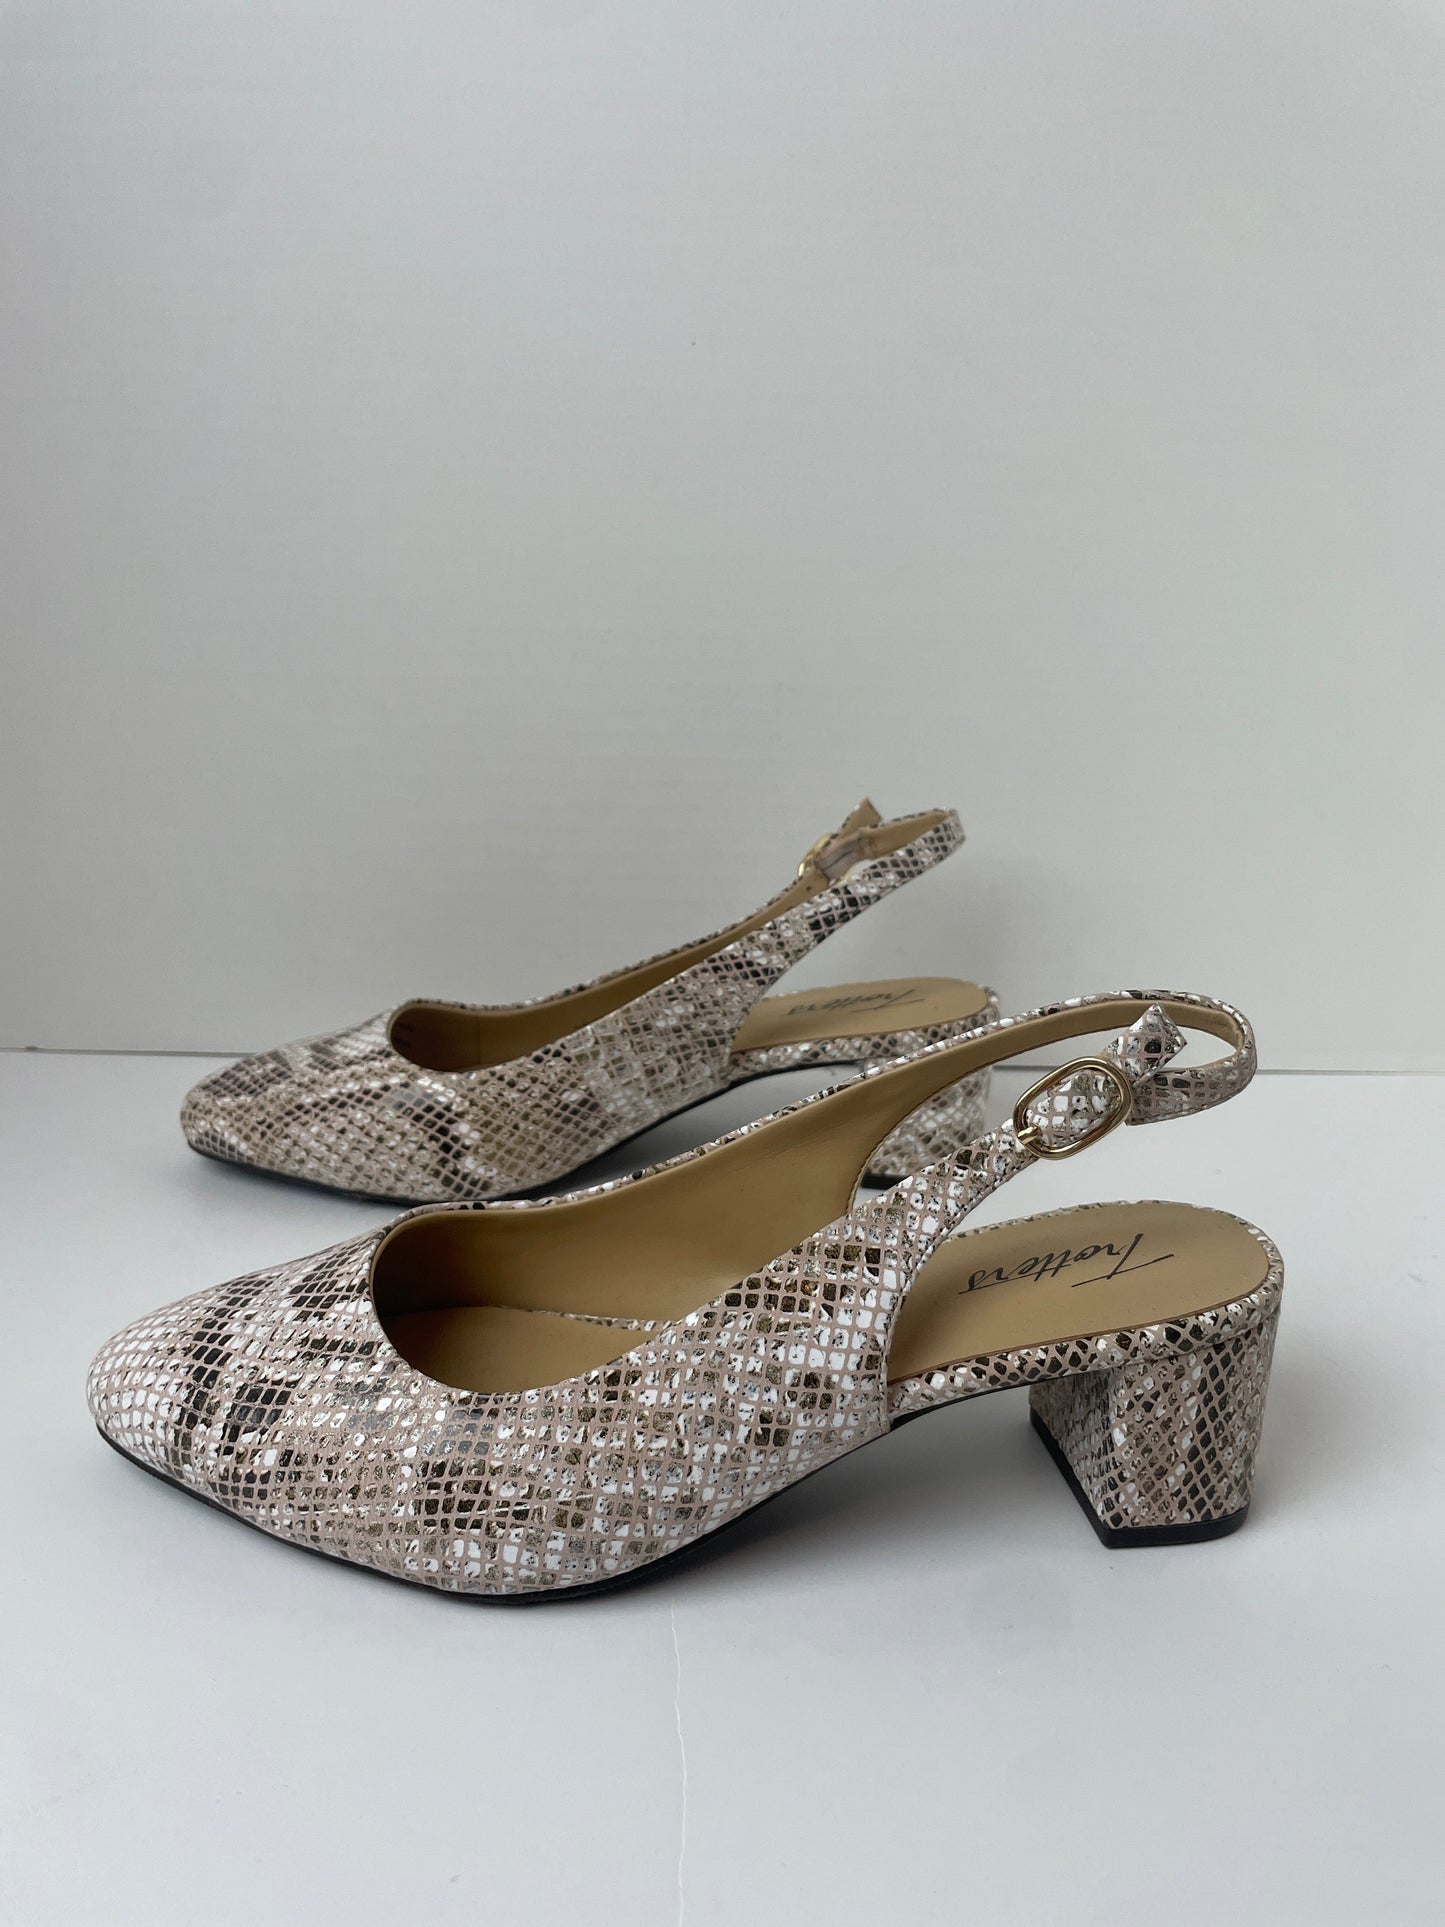 Snakeskin Print Shoes Heels Block Cmf, Size 7